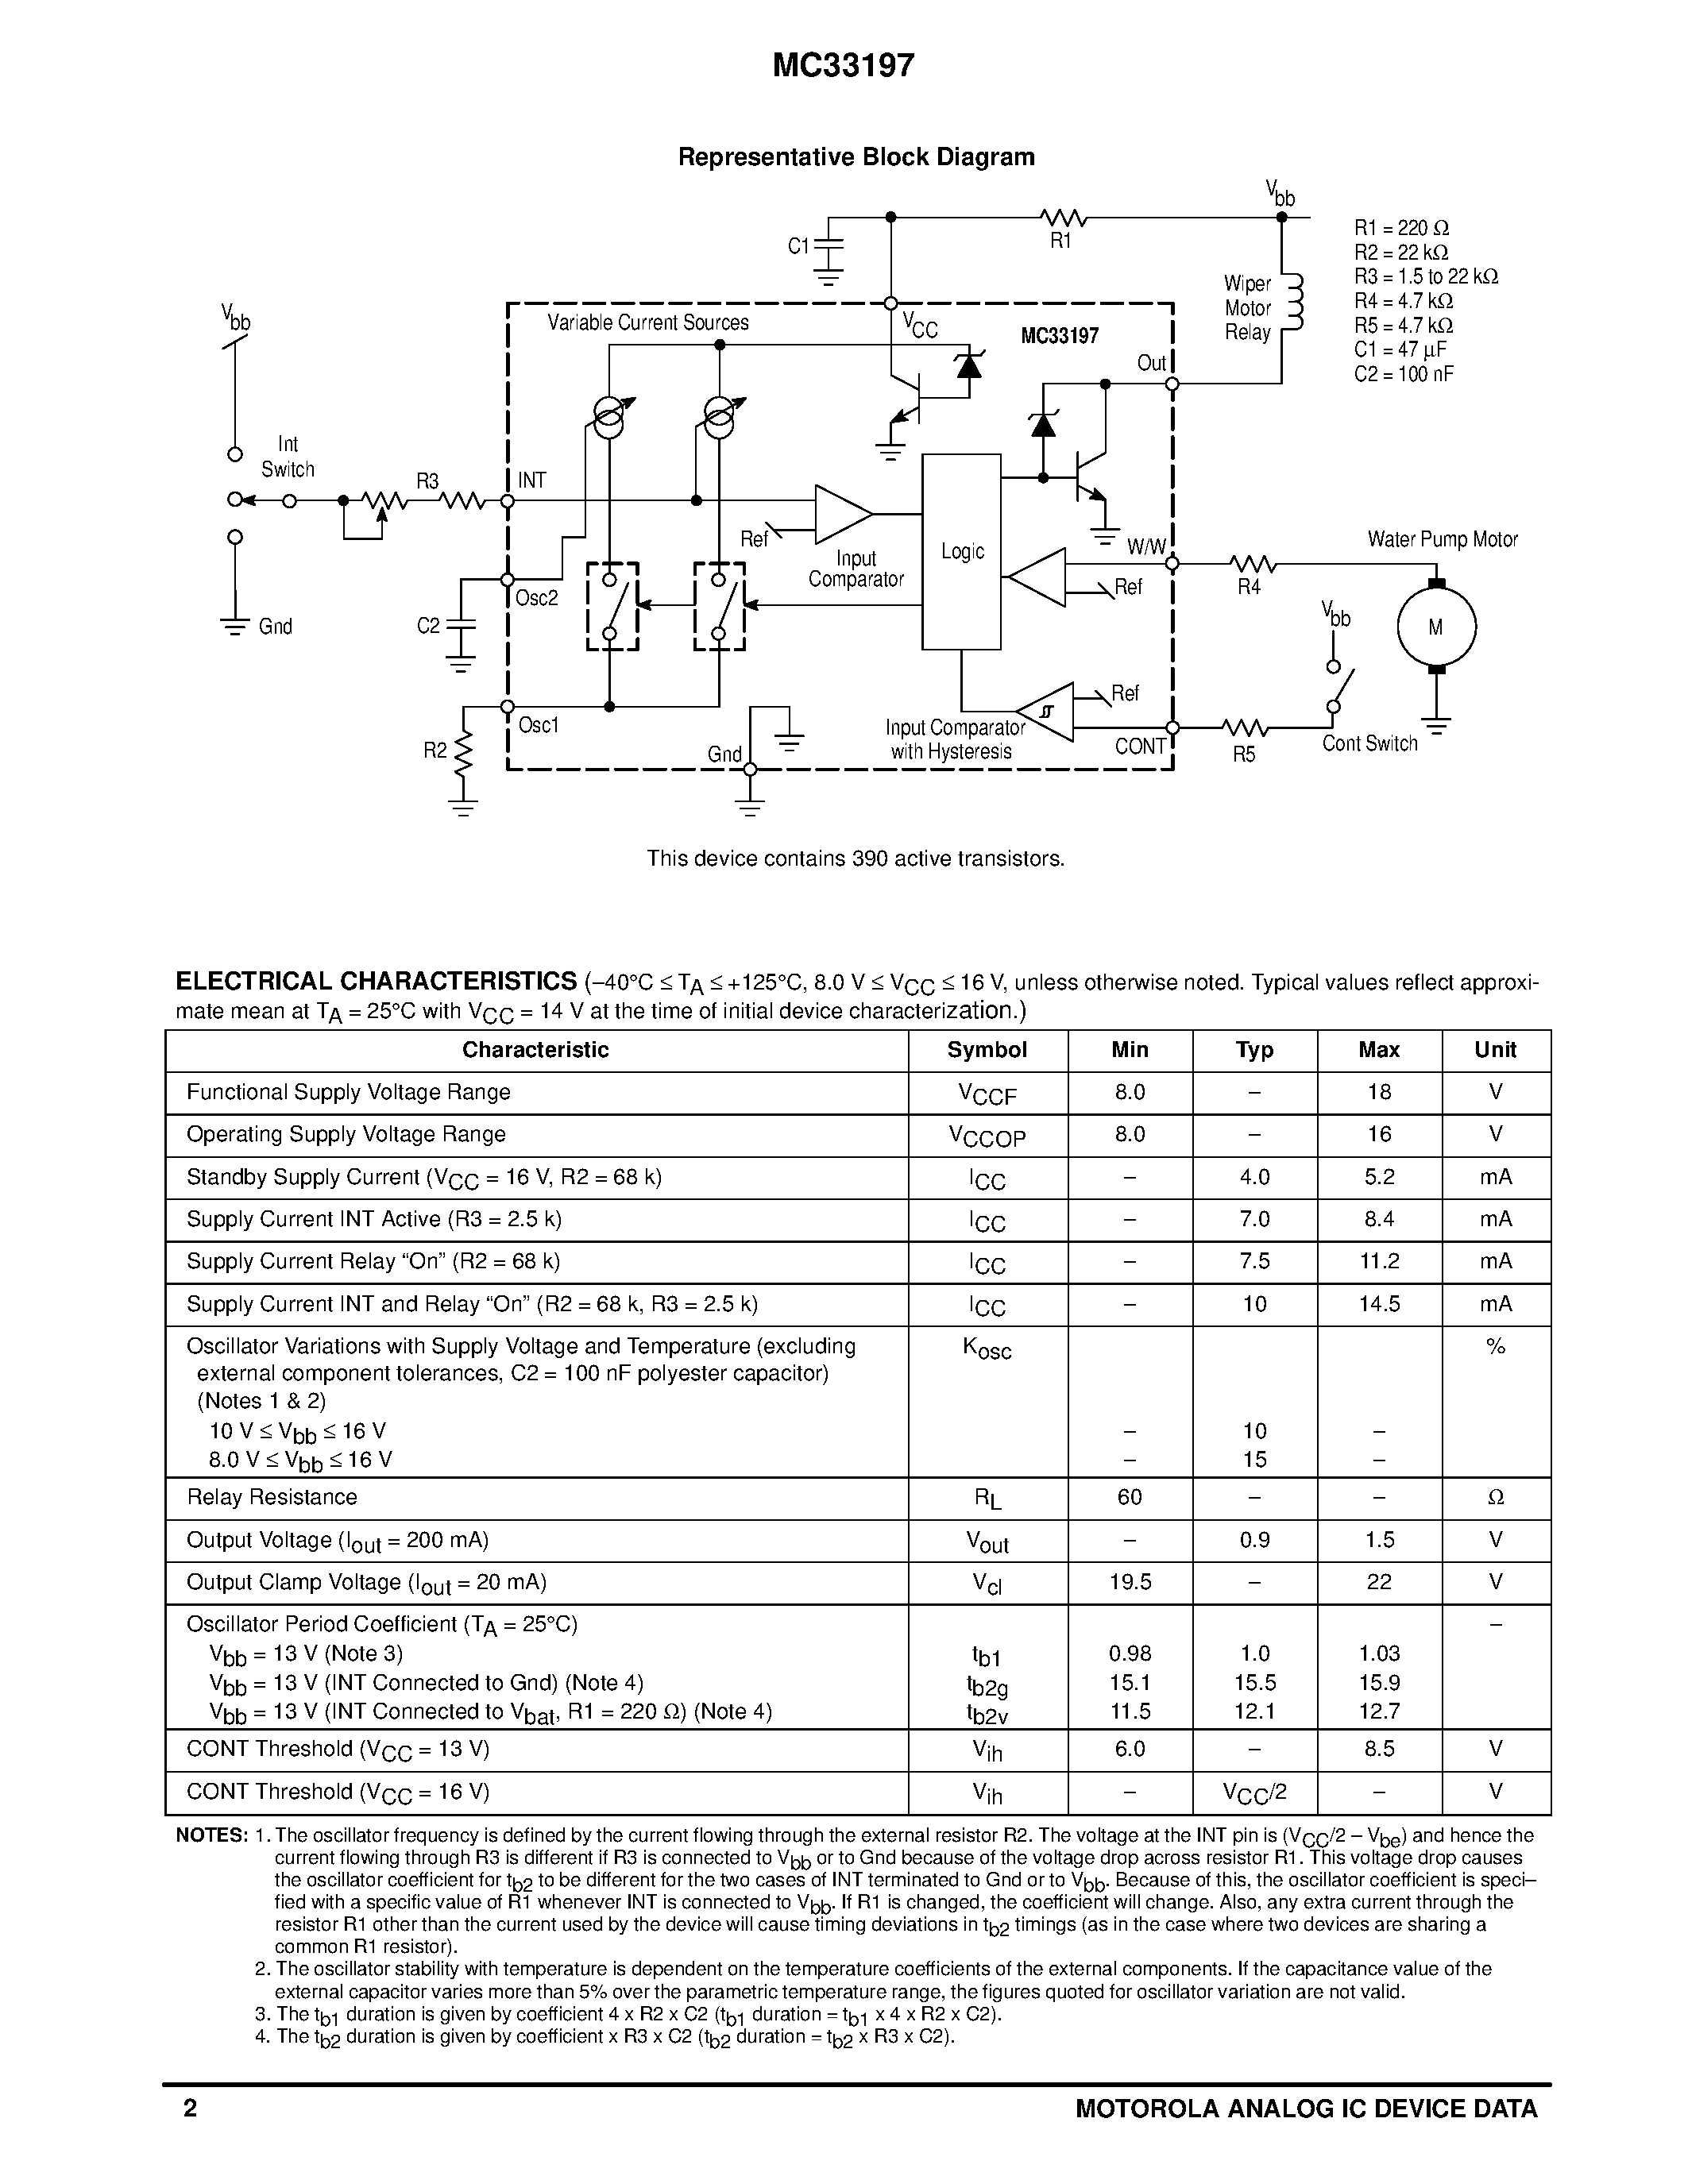 Datasheet MC33197 - AUTOMOTIVE WASH WIPER TIMER page 2